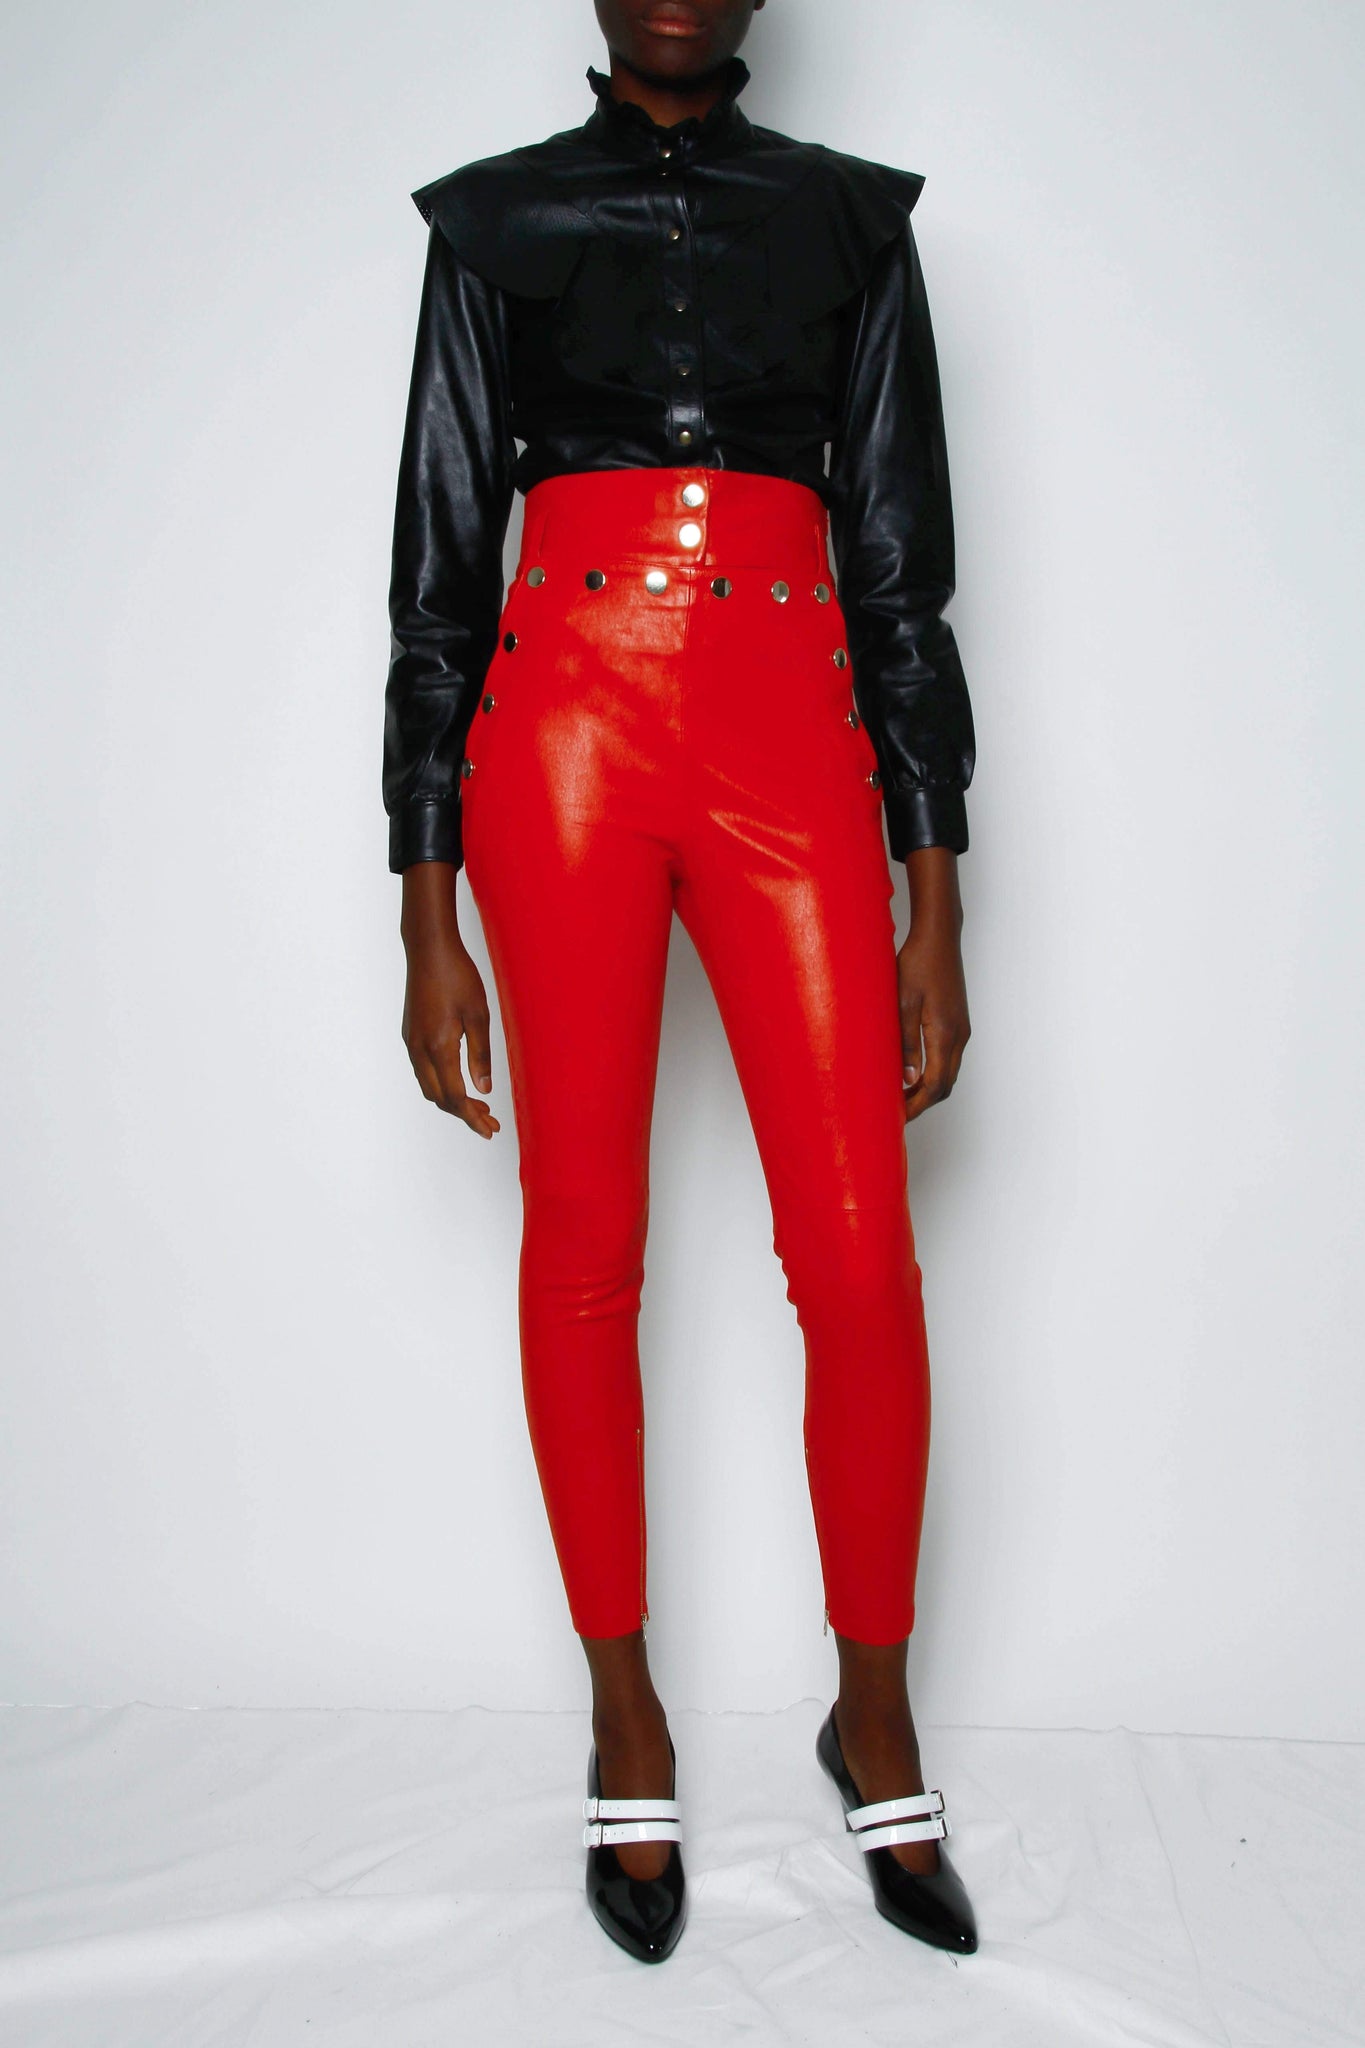 Trousers  Shorts  Buy leather high waist pant online  Skiim London   SKIIM Paris